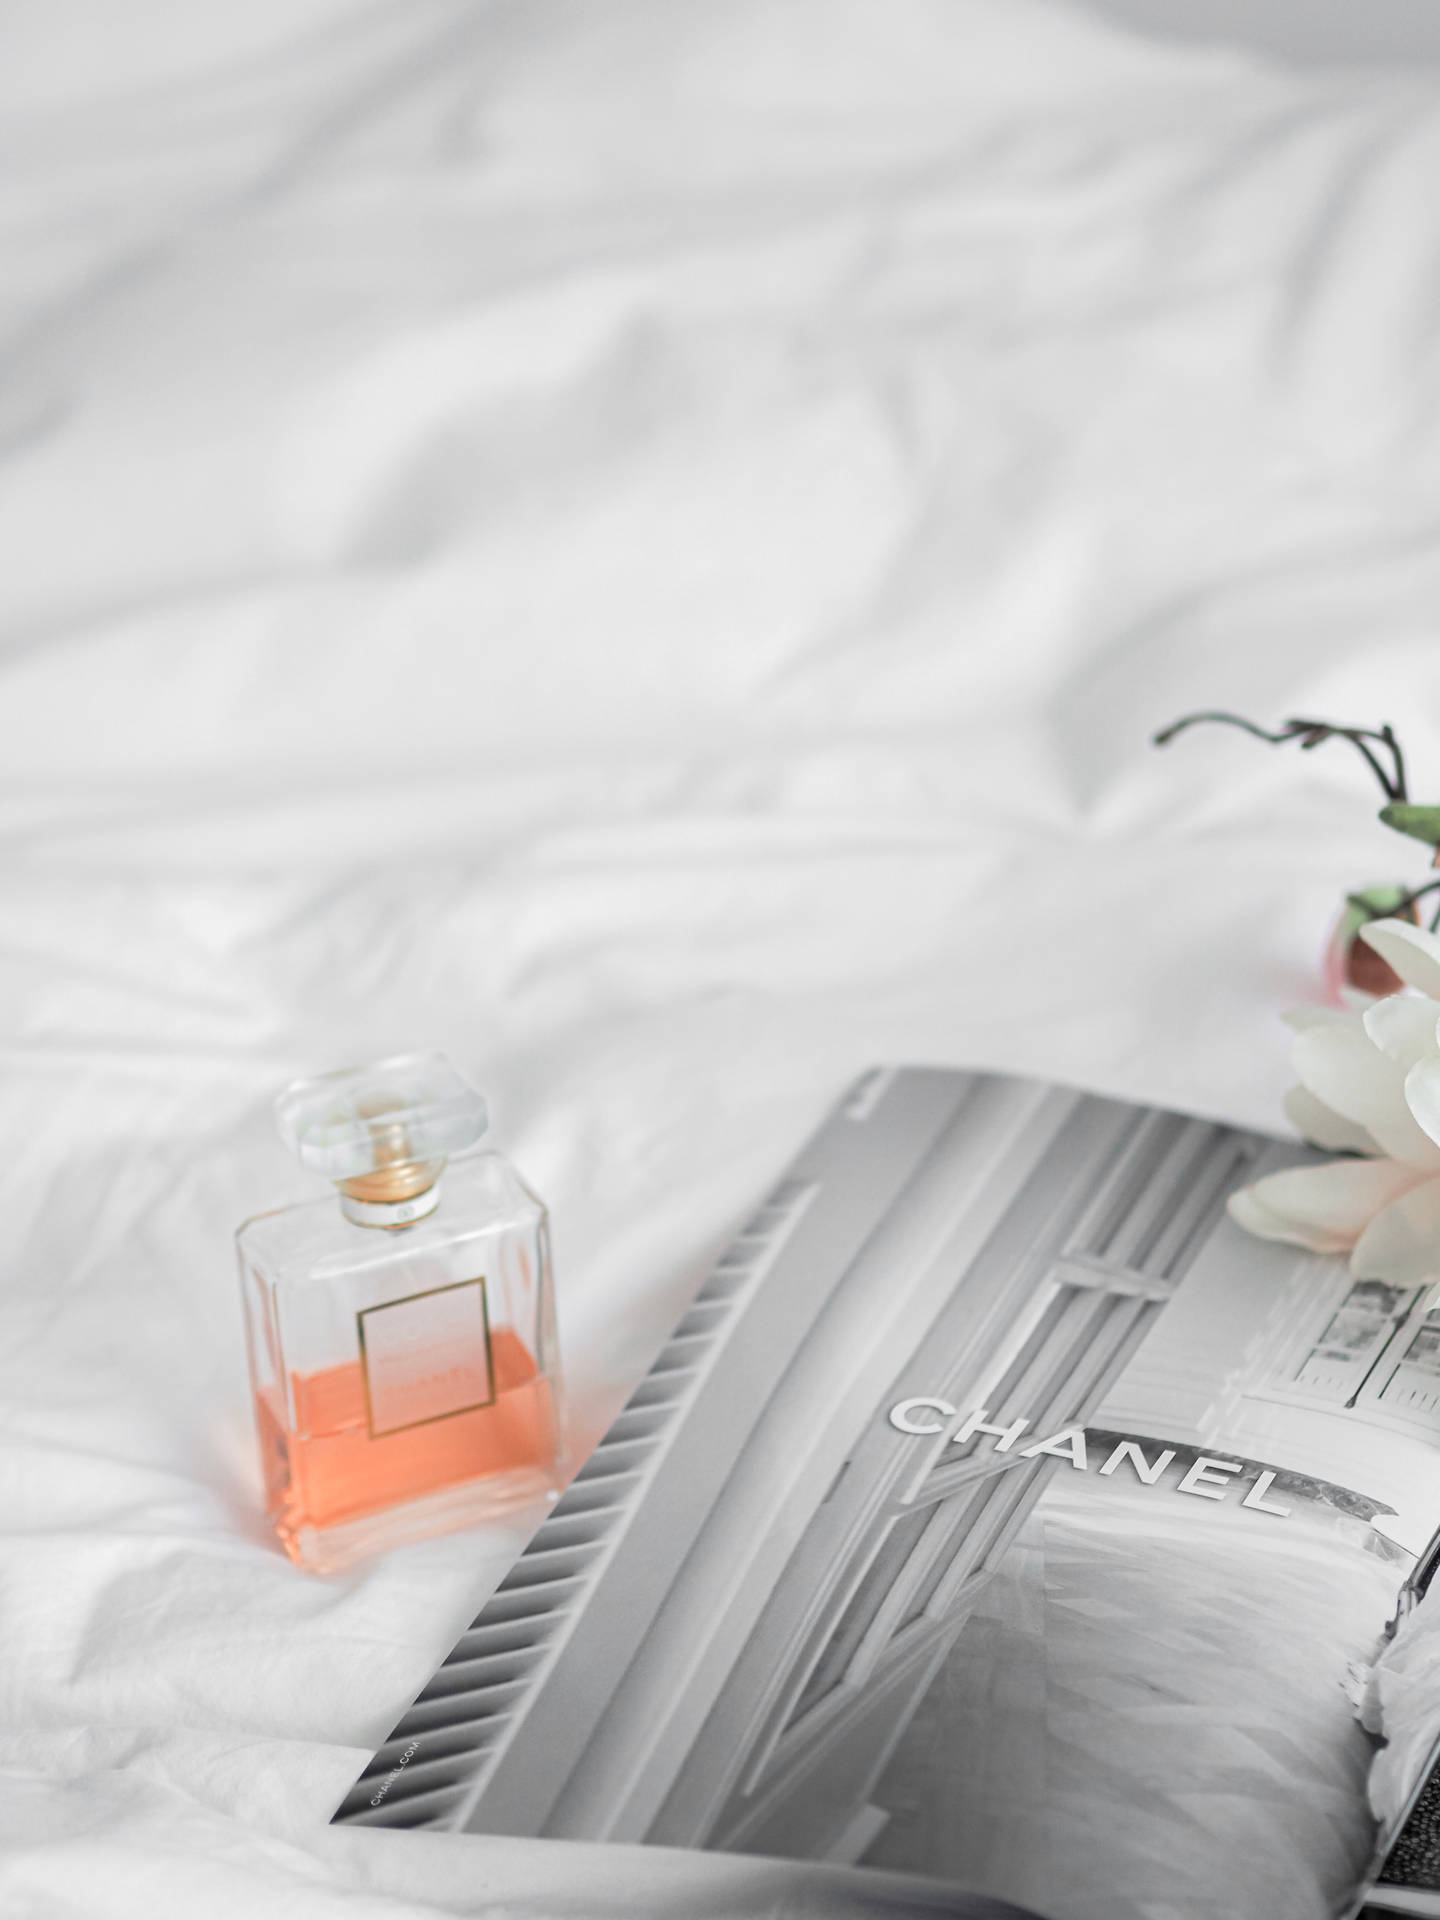 Chanel Mademoiselle Perfume With Magazine Background